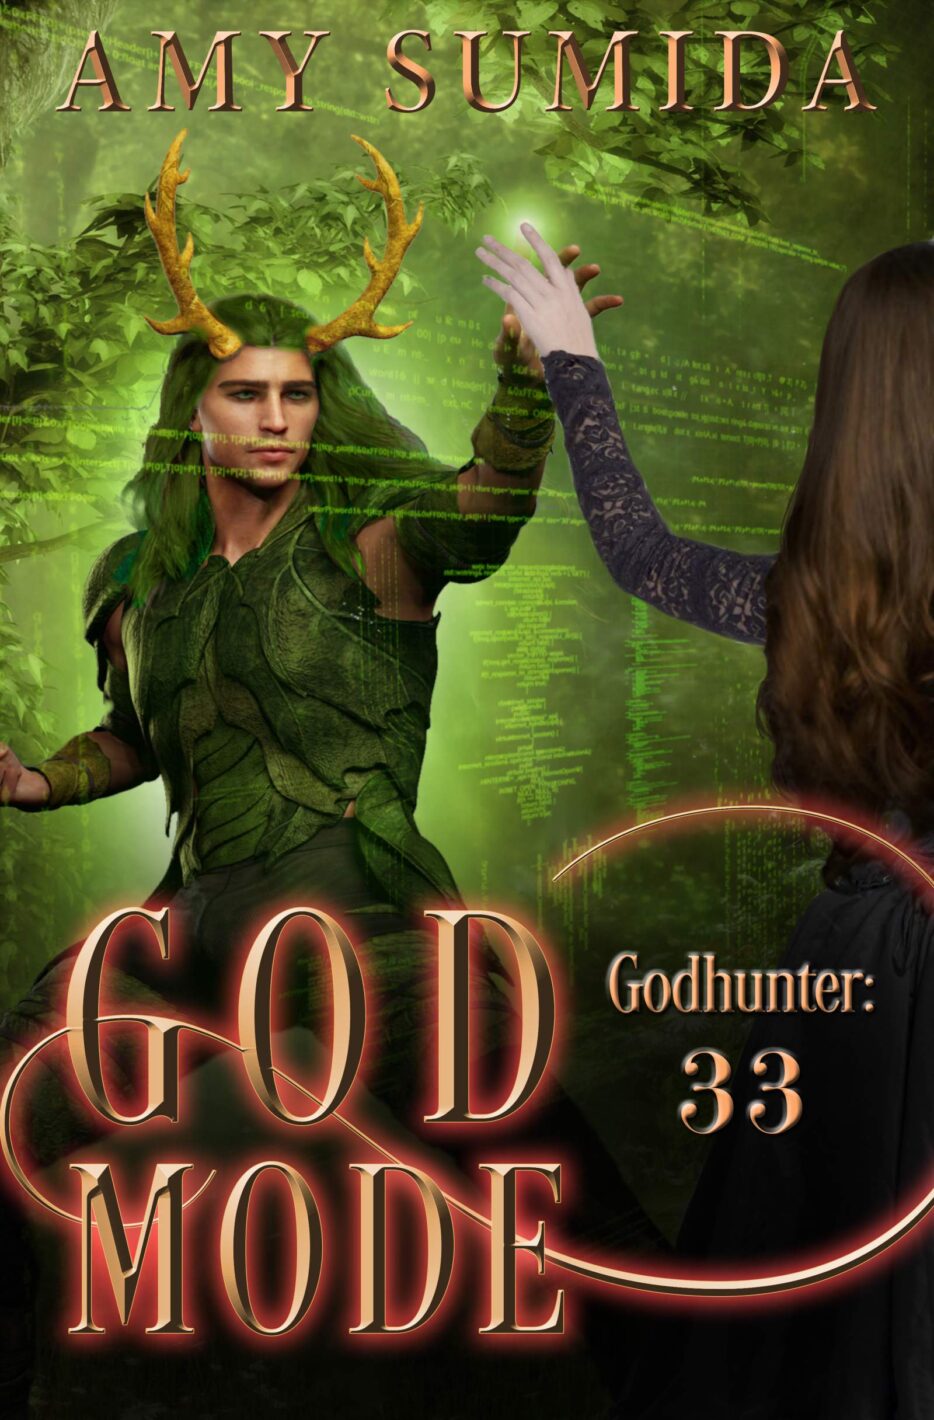 God Mode book cover - Godhunter 33